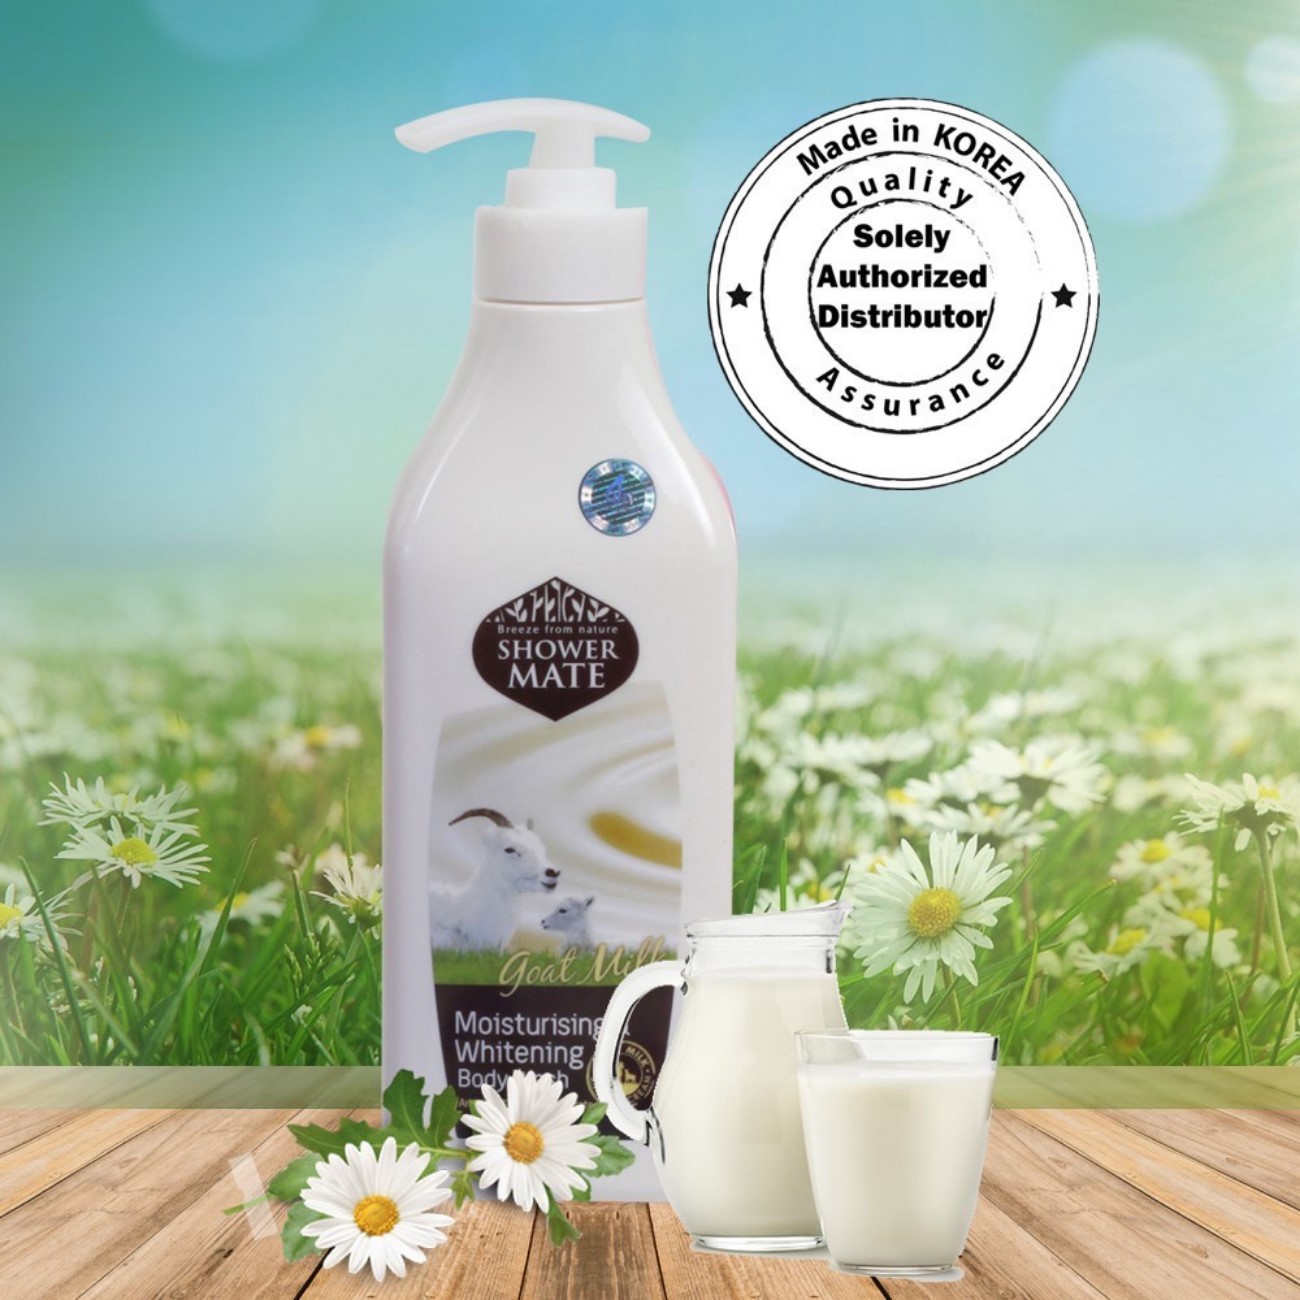 Sữa Tắm Showermate Cao Cấp Sữa Dê 550g